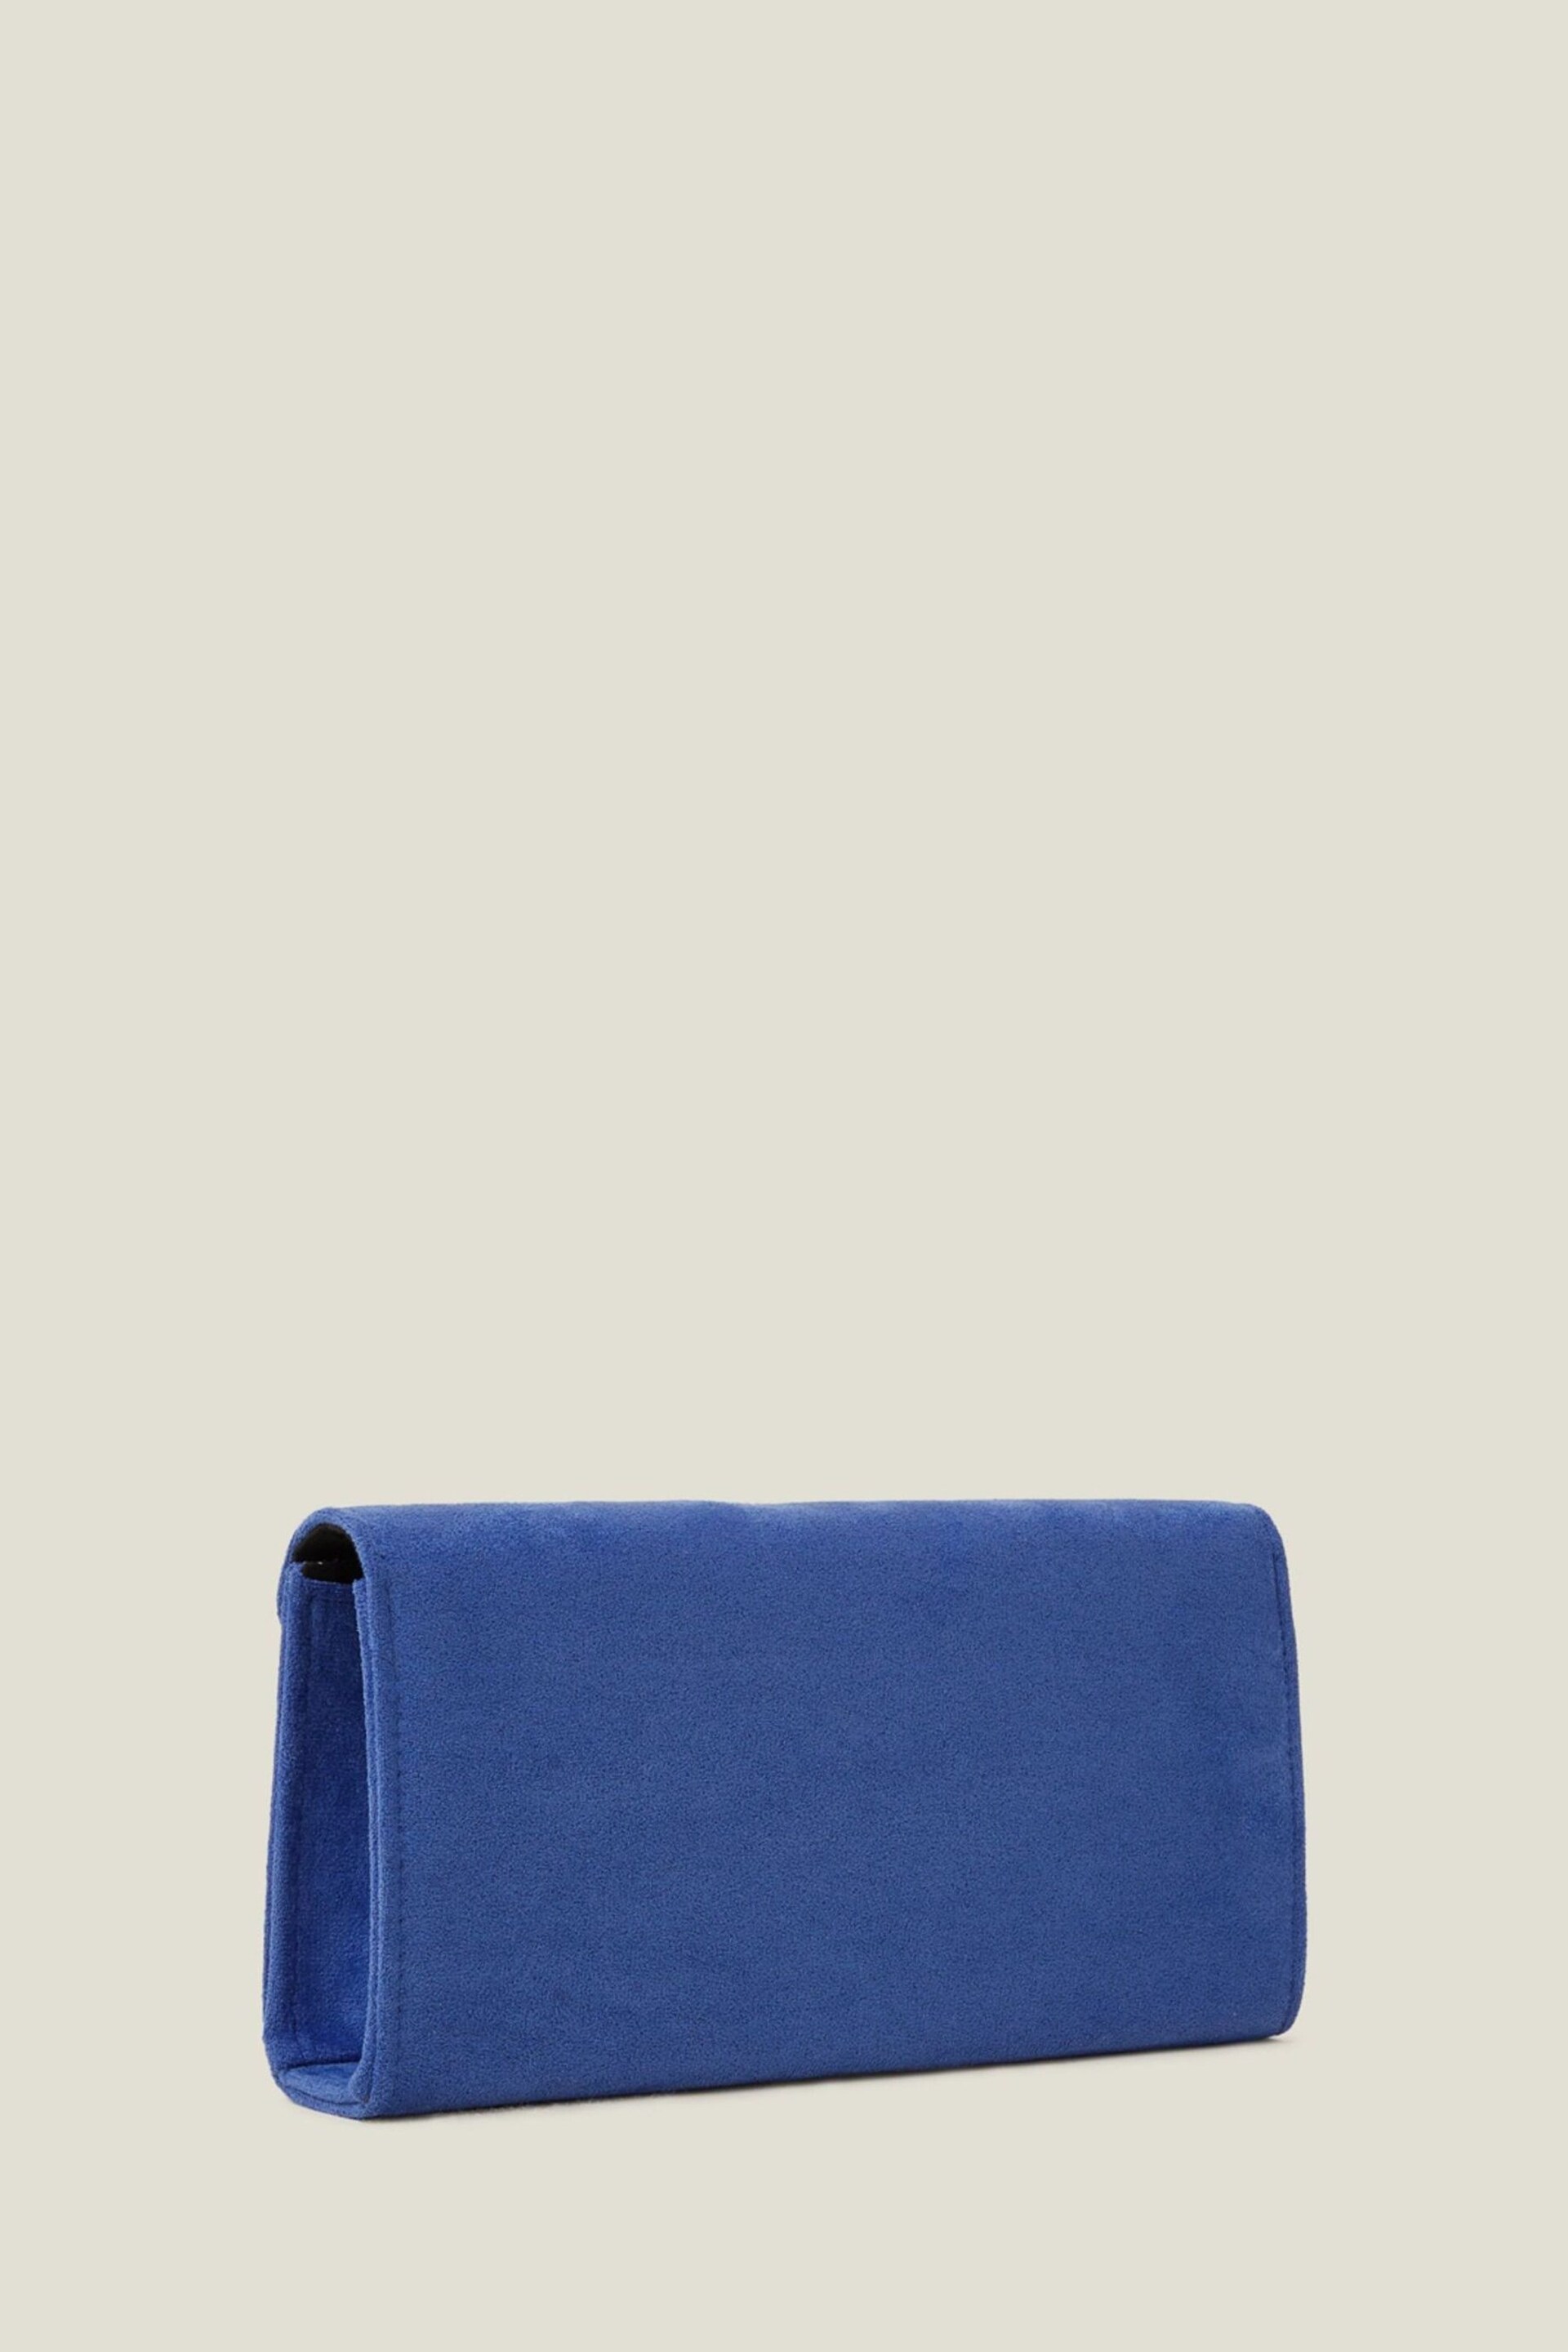 Accessorize Blue Suedette Box Clutch Bag - Image 3 of 3